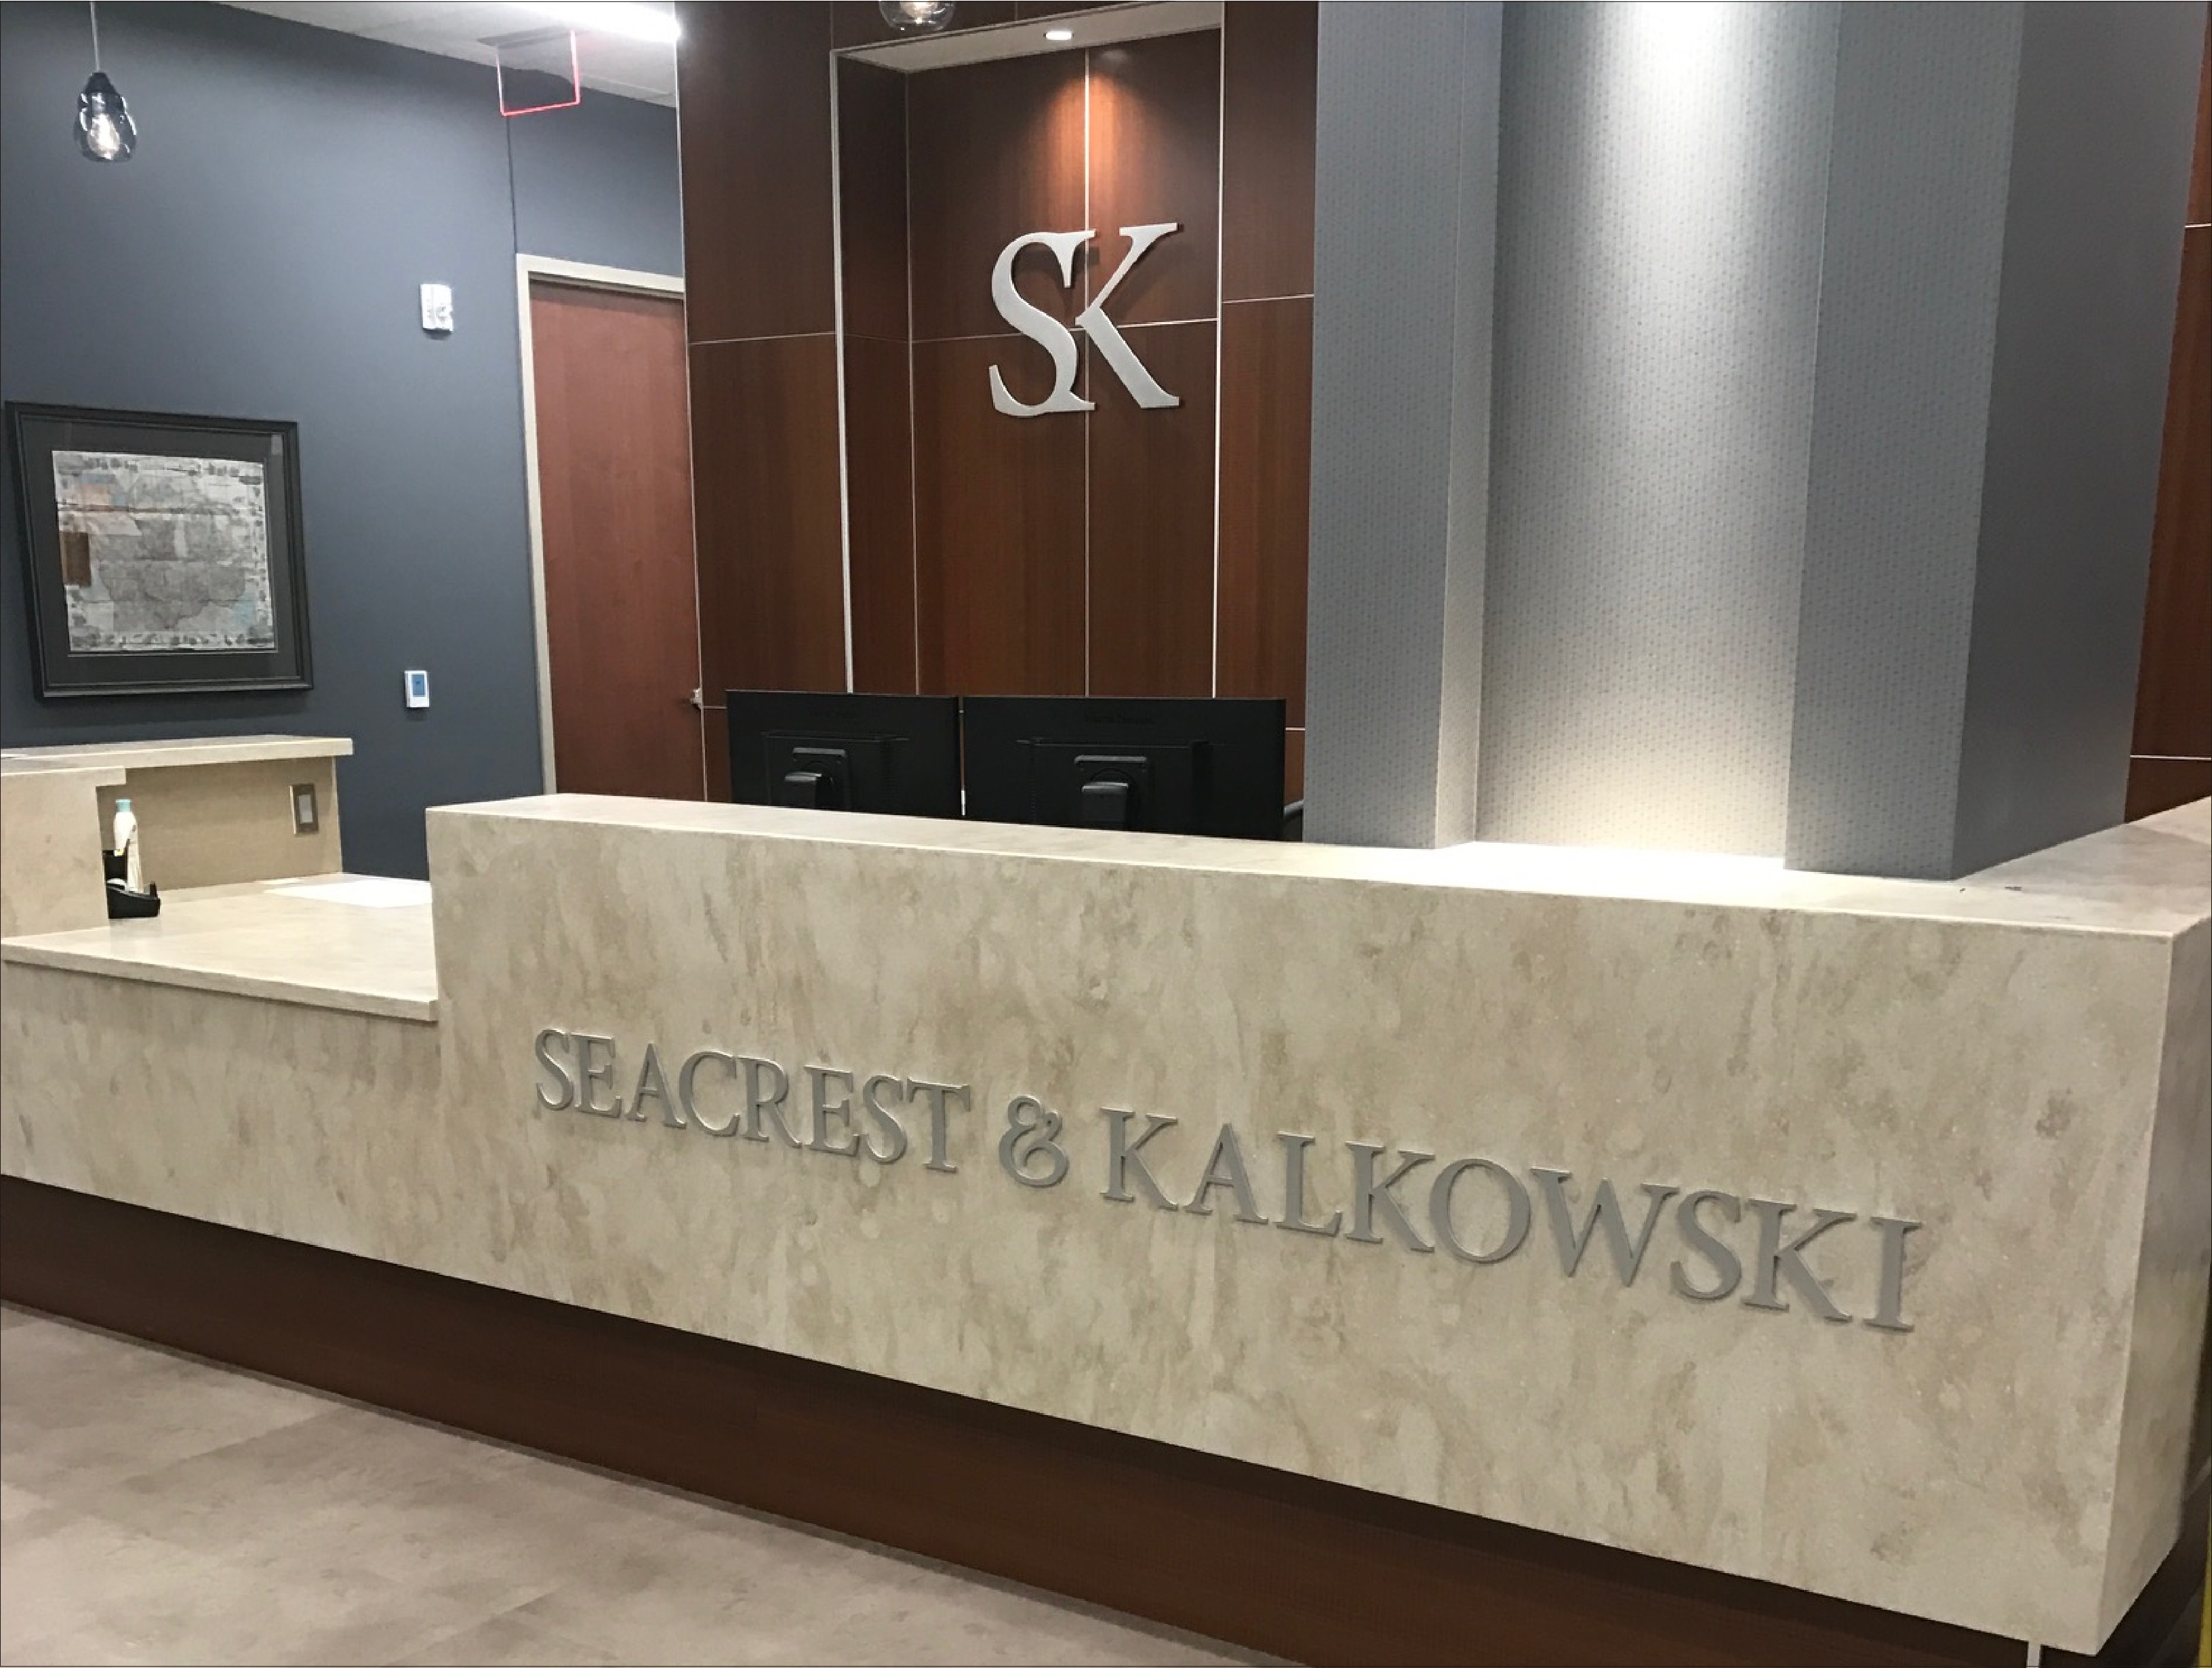 Seacrest & Kalkowski Dimensional Sign